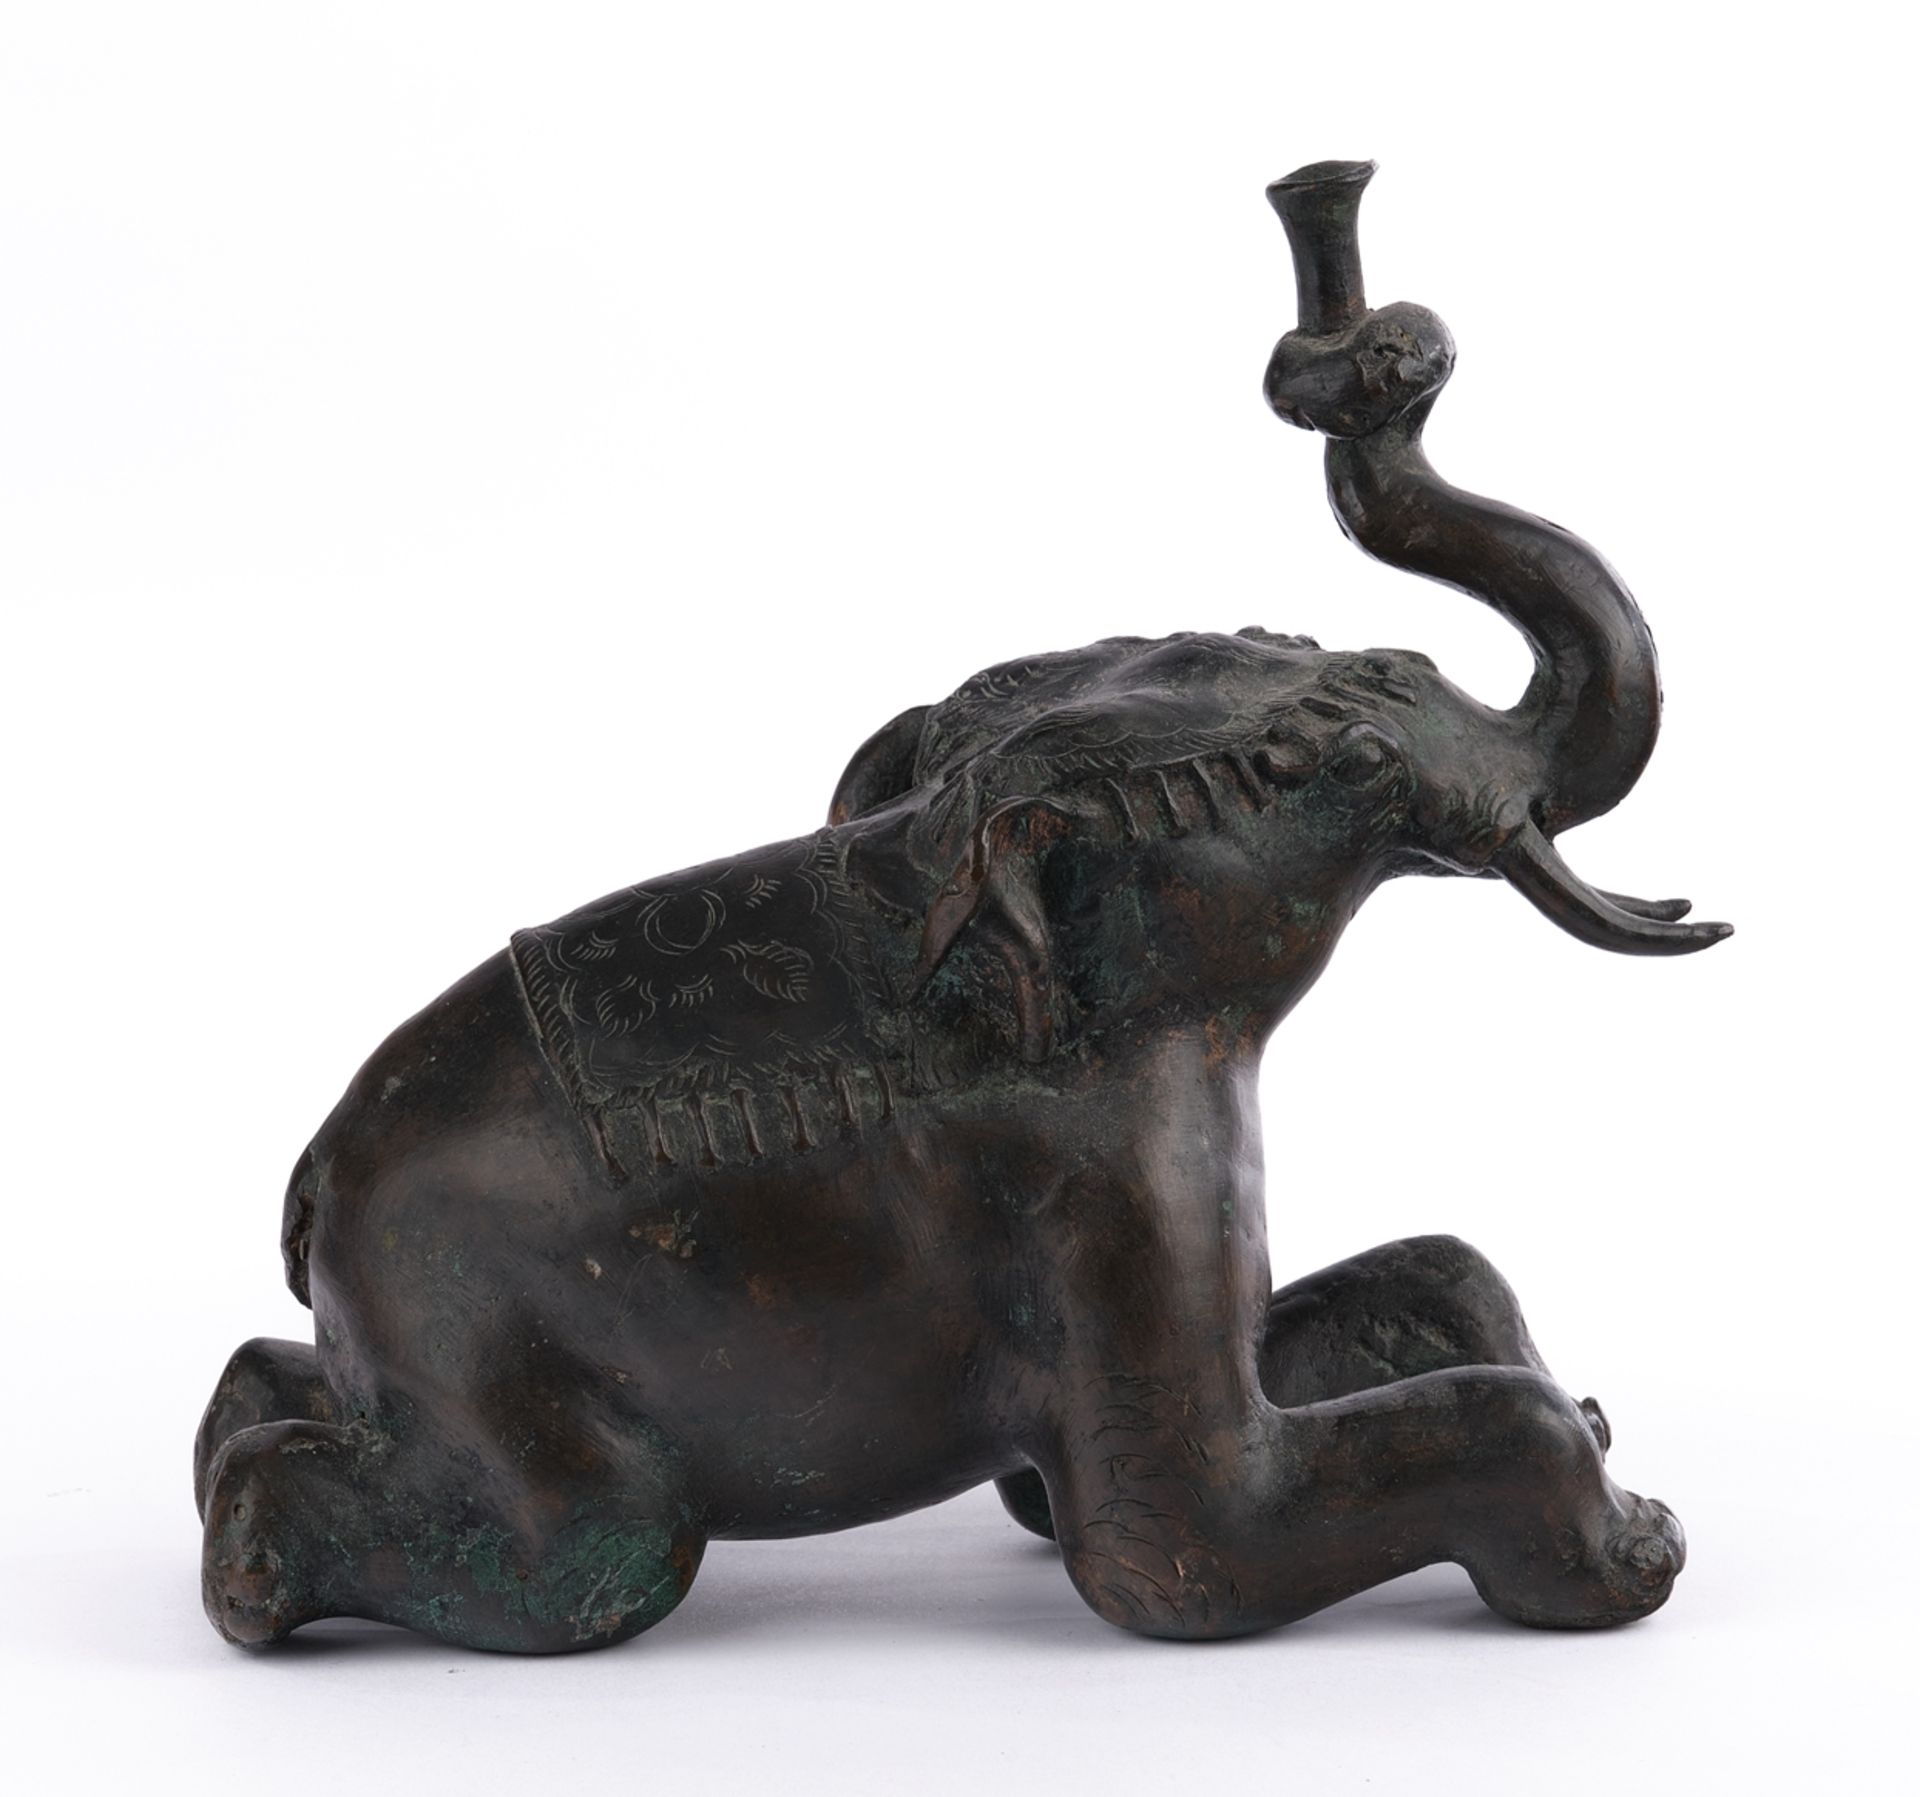 Skulptur, "Liegender Elefant", Indien, 20./21. Jh., Metall, dunkel patiniert, 22 cm hoch